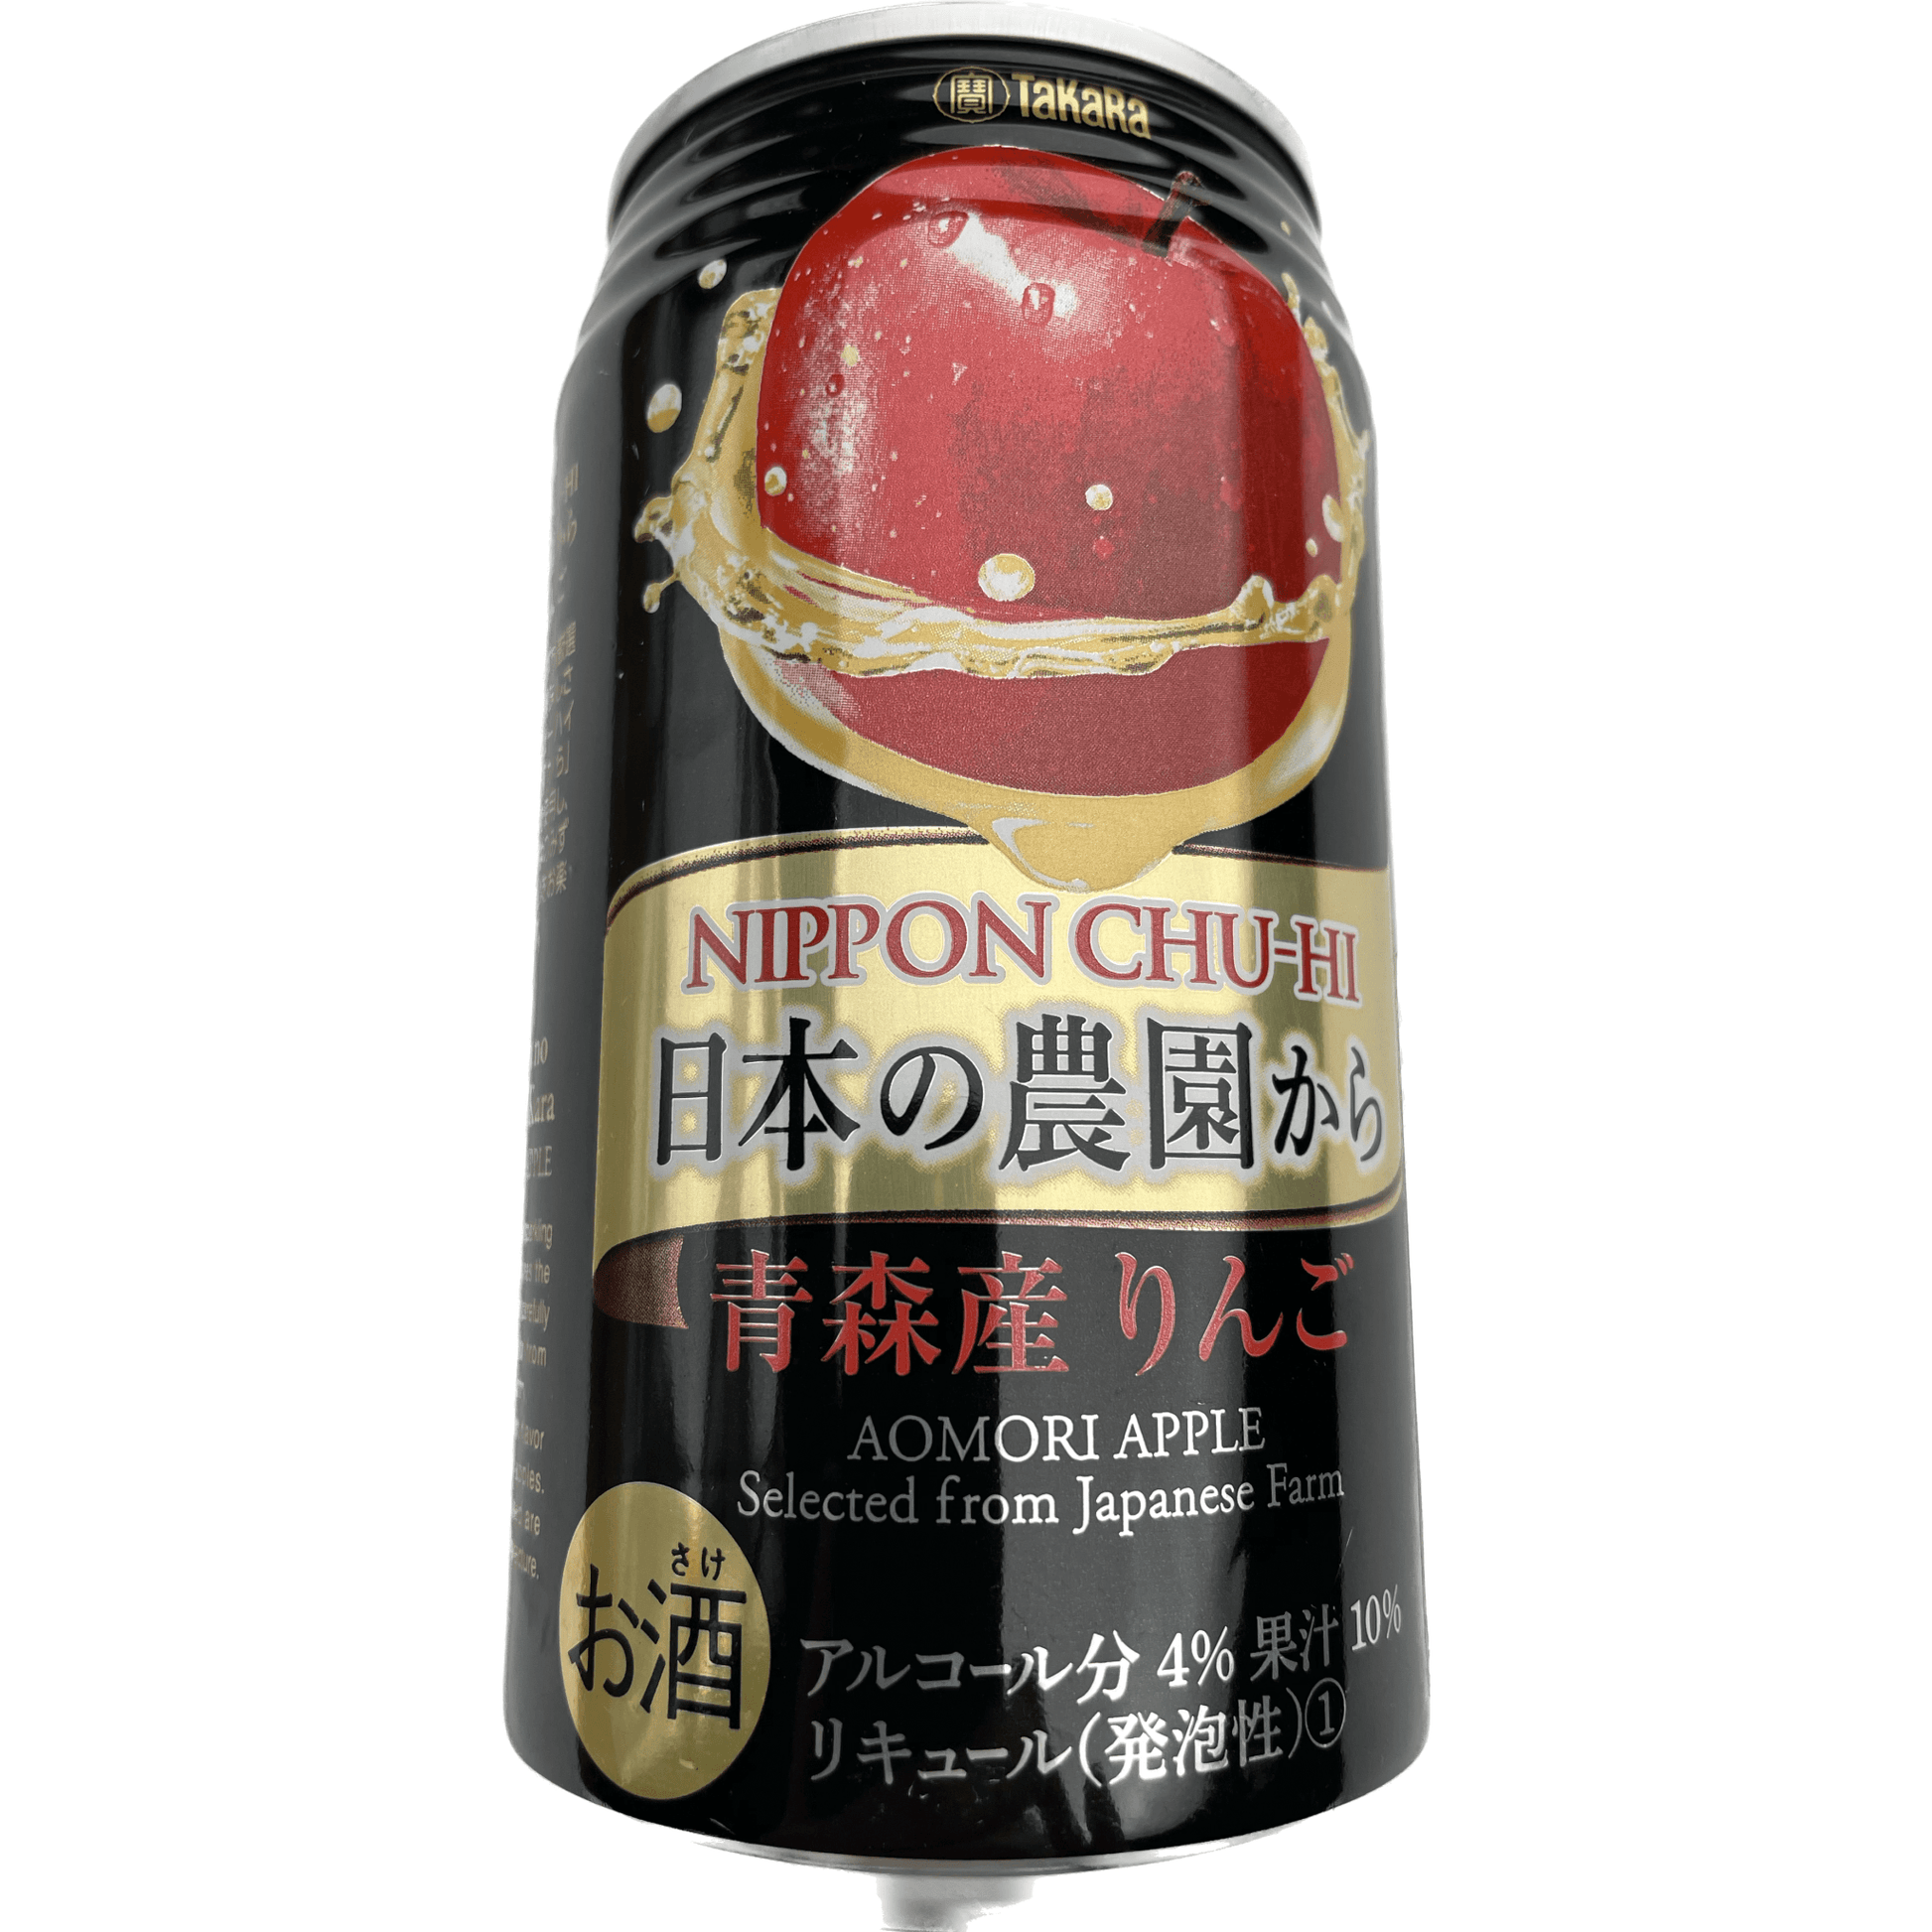 Takara canned chuhai apples from Aomori farm in Japan タカラ　缶チューハイ　日本の農園から青森産りんご　350ML - RiceWineShop